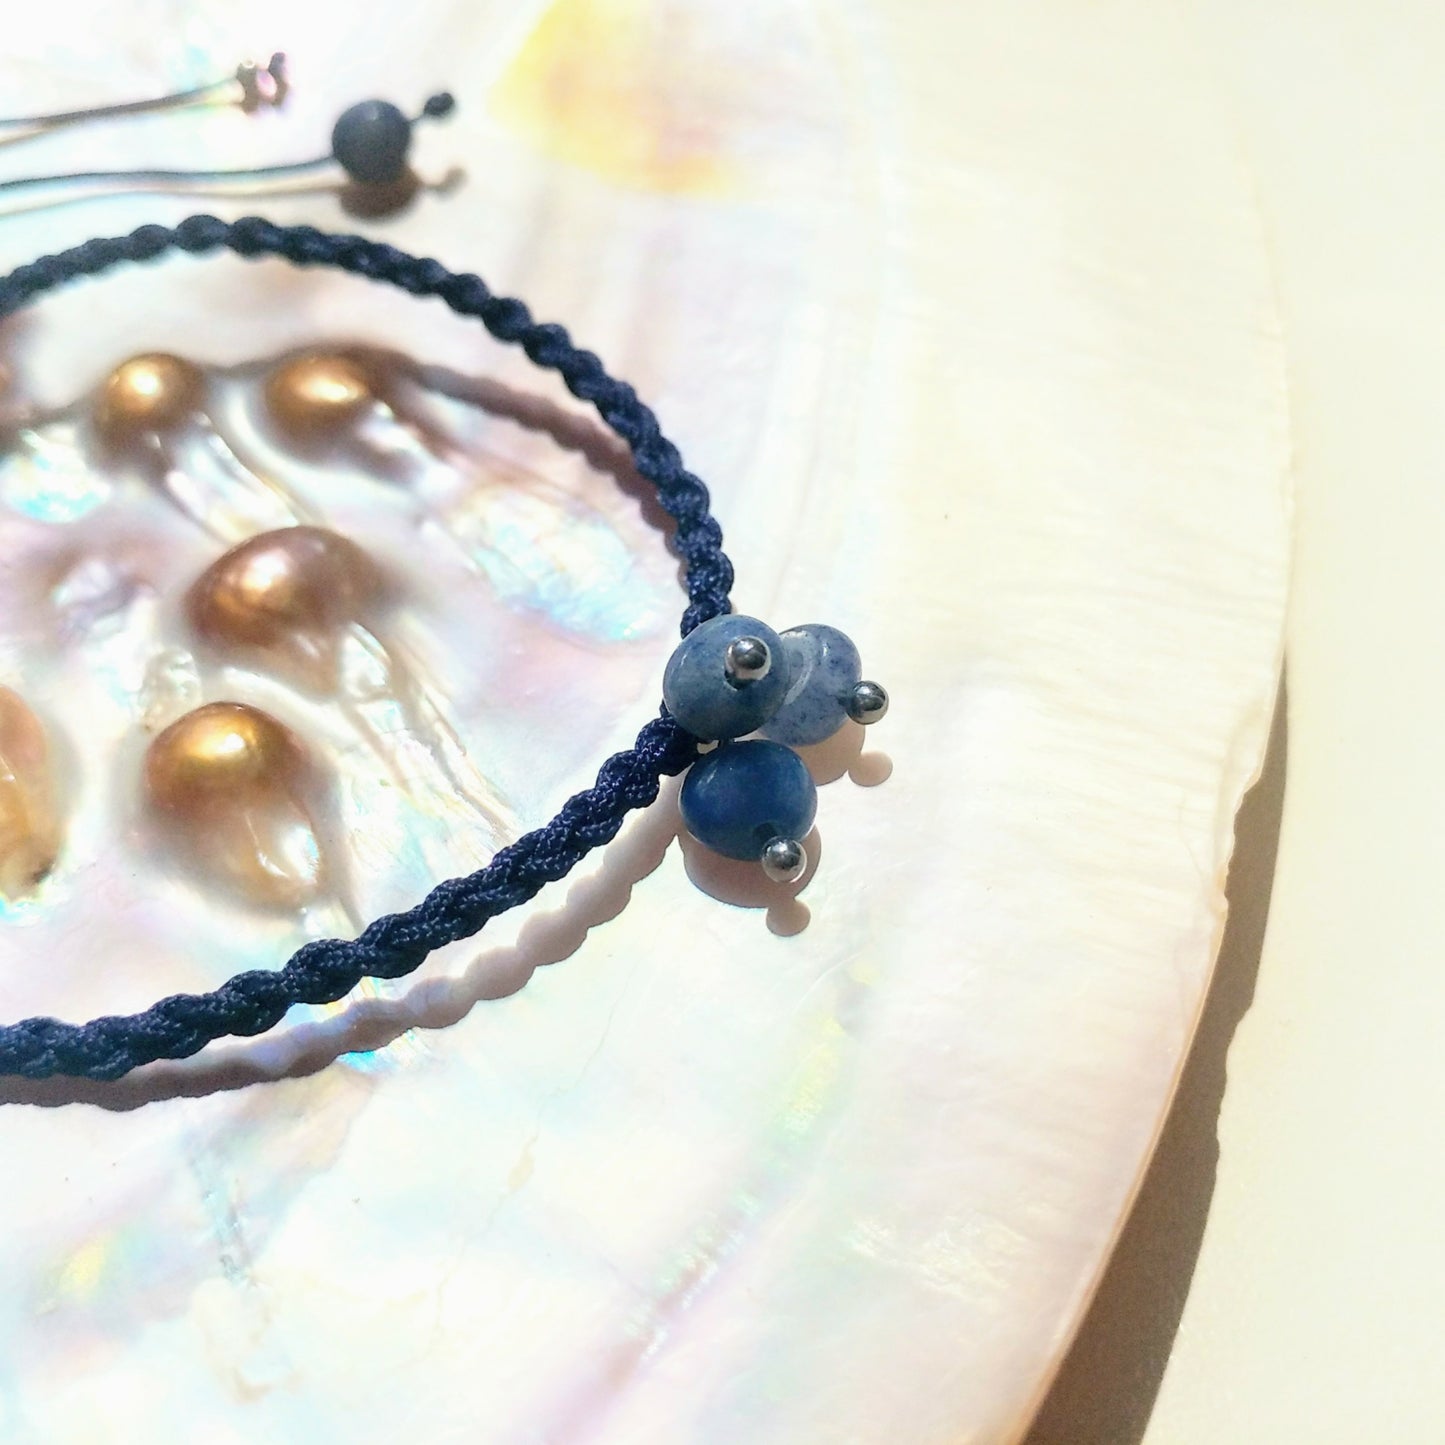 Blaues Edelstein Armband geflochten - Dumortierit